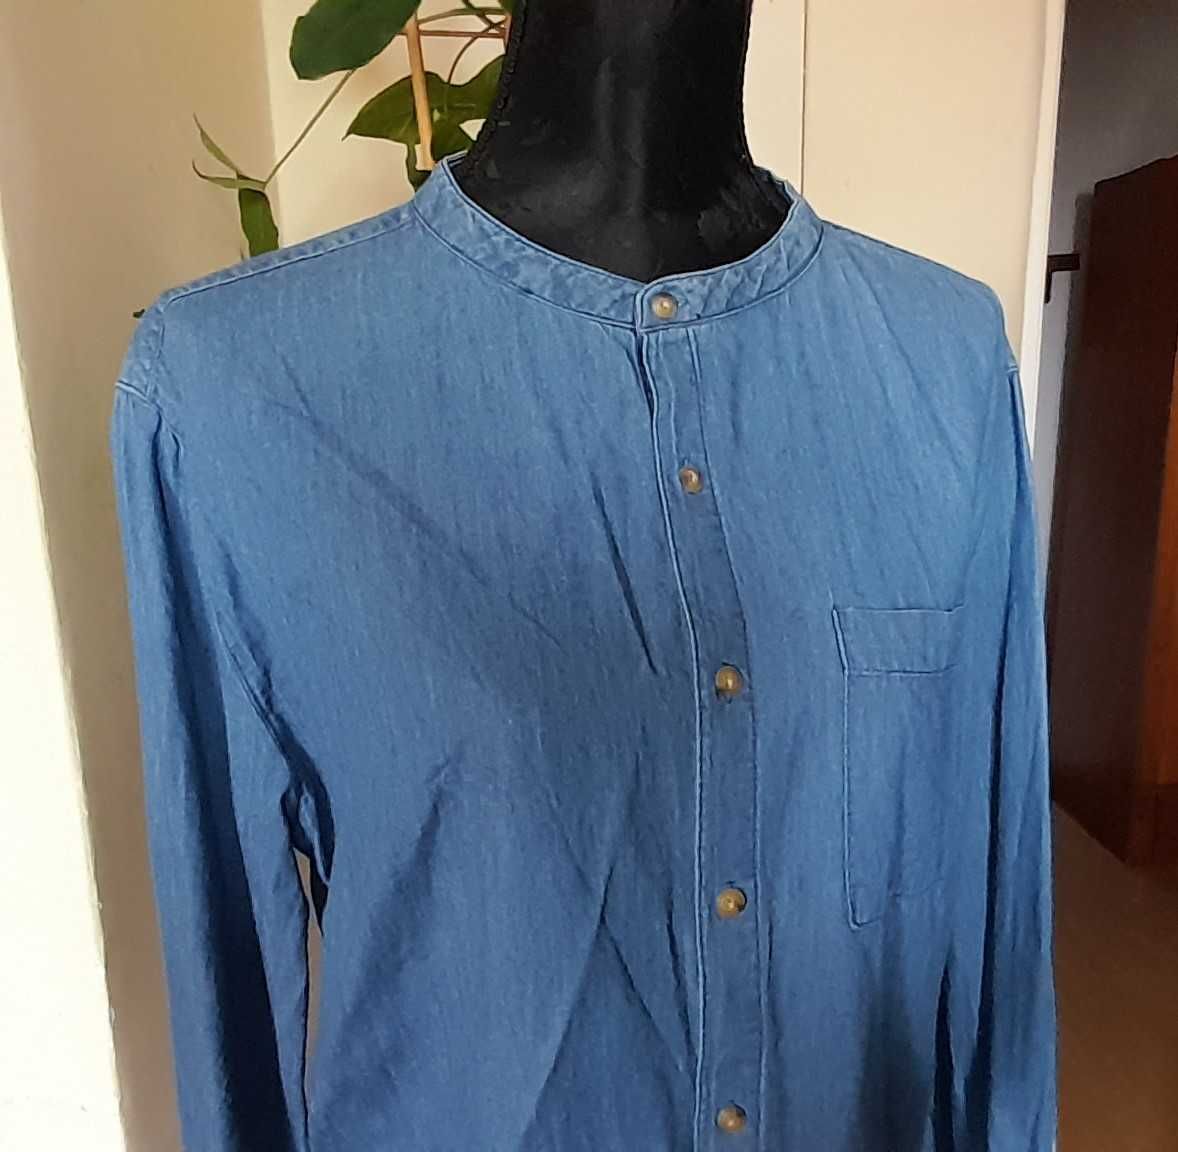 Koszula męska Jeans    Bawełna 100% - XL  stan idealny  SHIRT   stójka